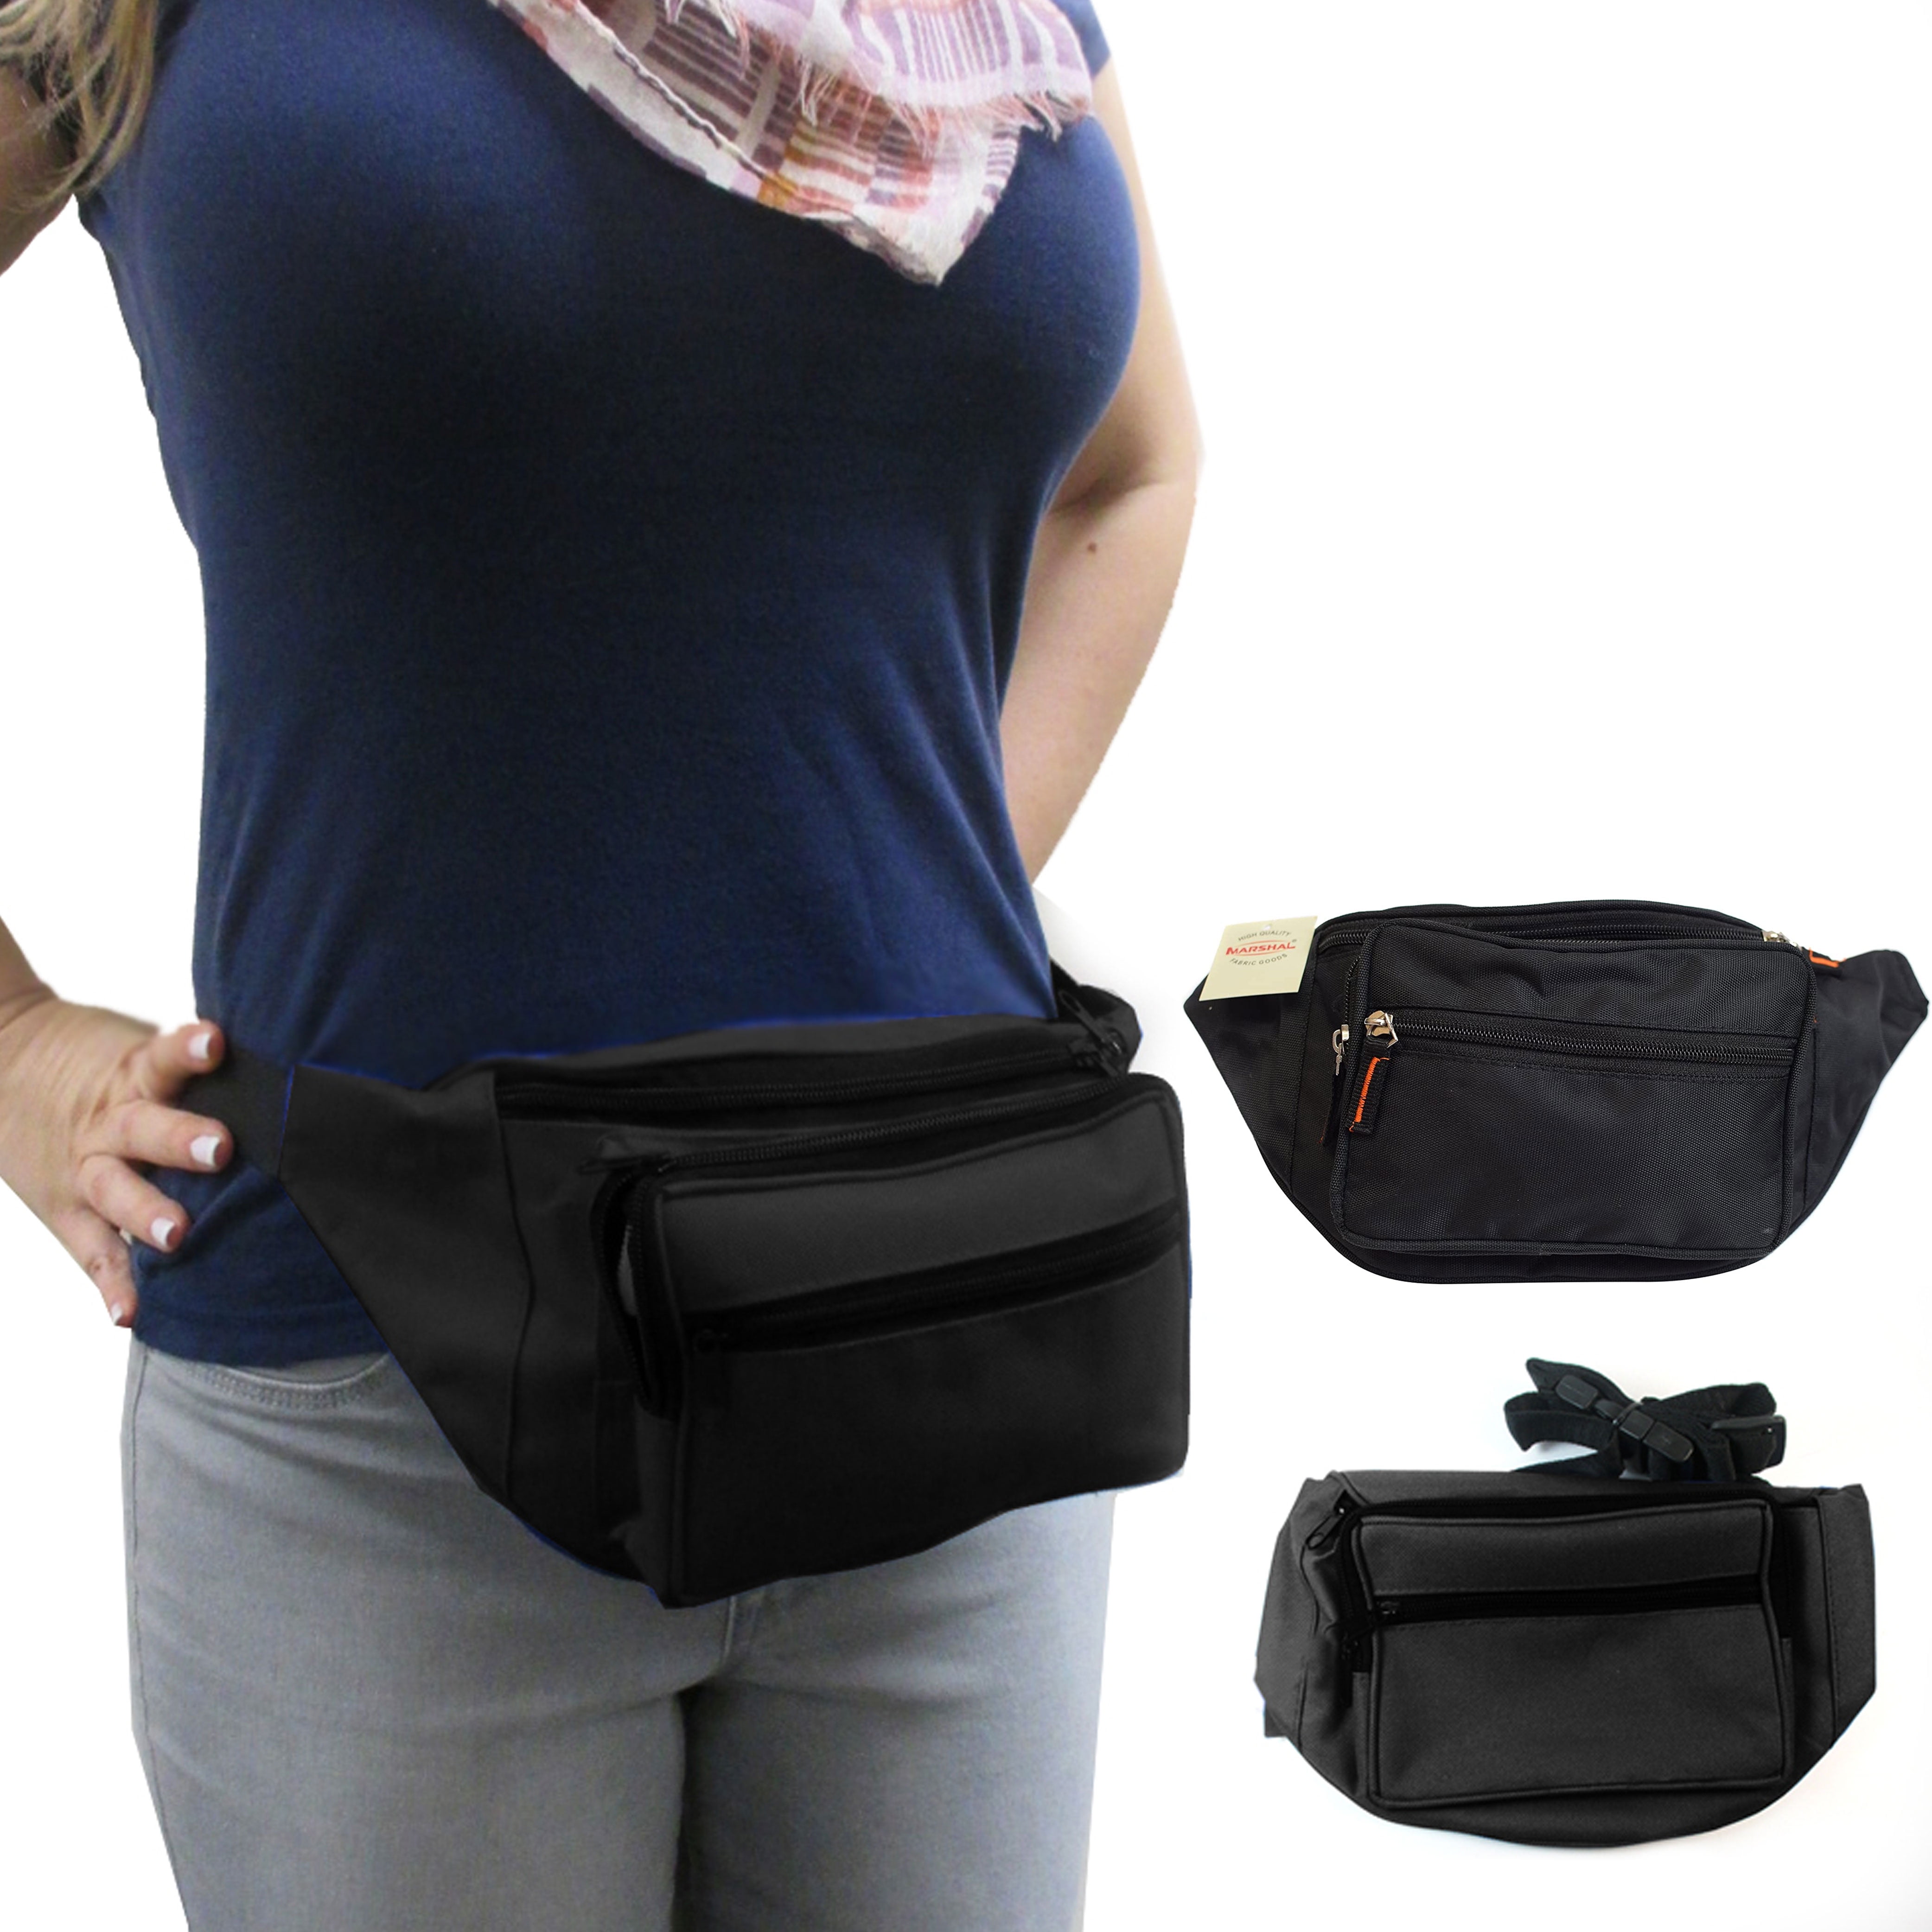 Waist Fanny Pack Adjustable Belt Bag Pouch Hip Purse Nylon Black Walmart.com